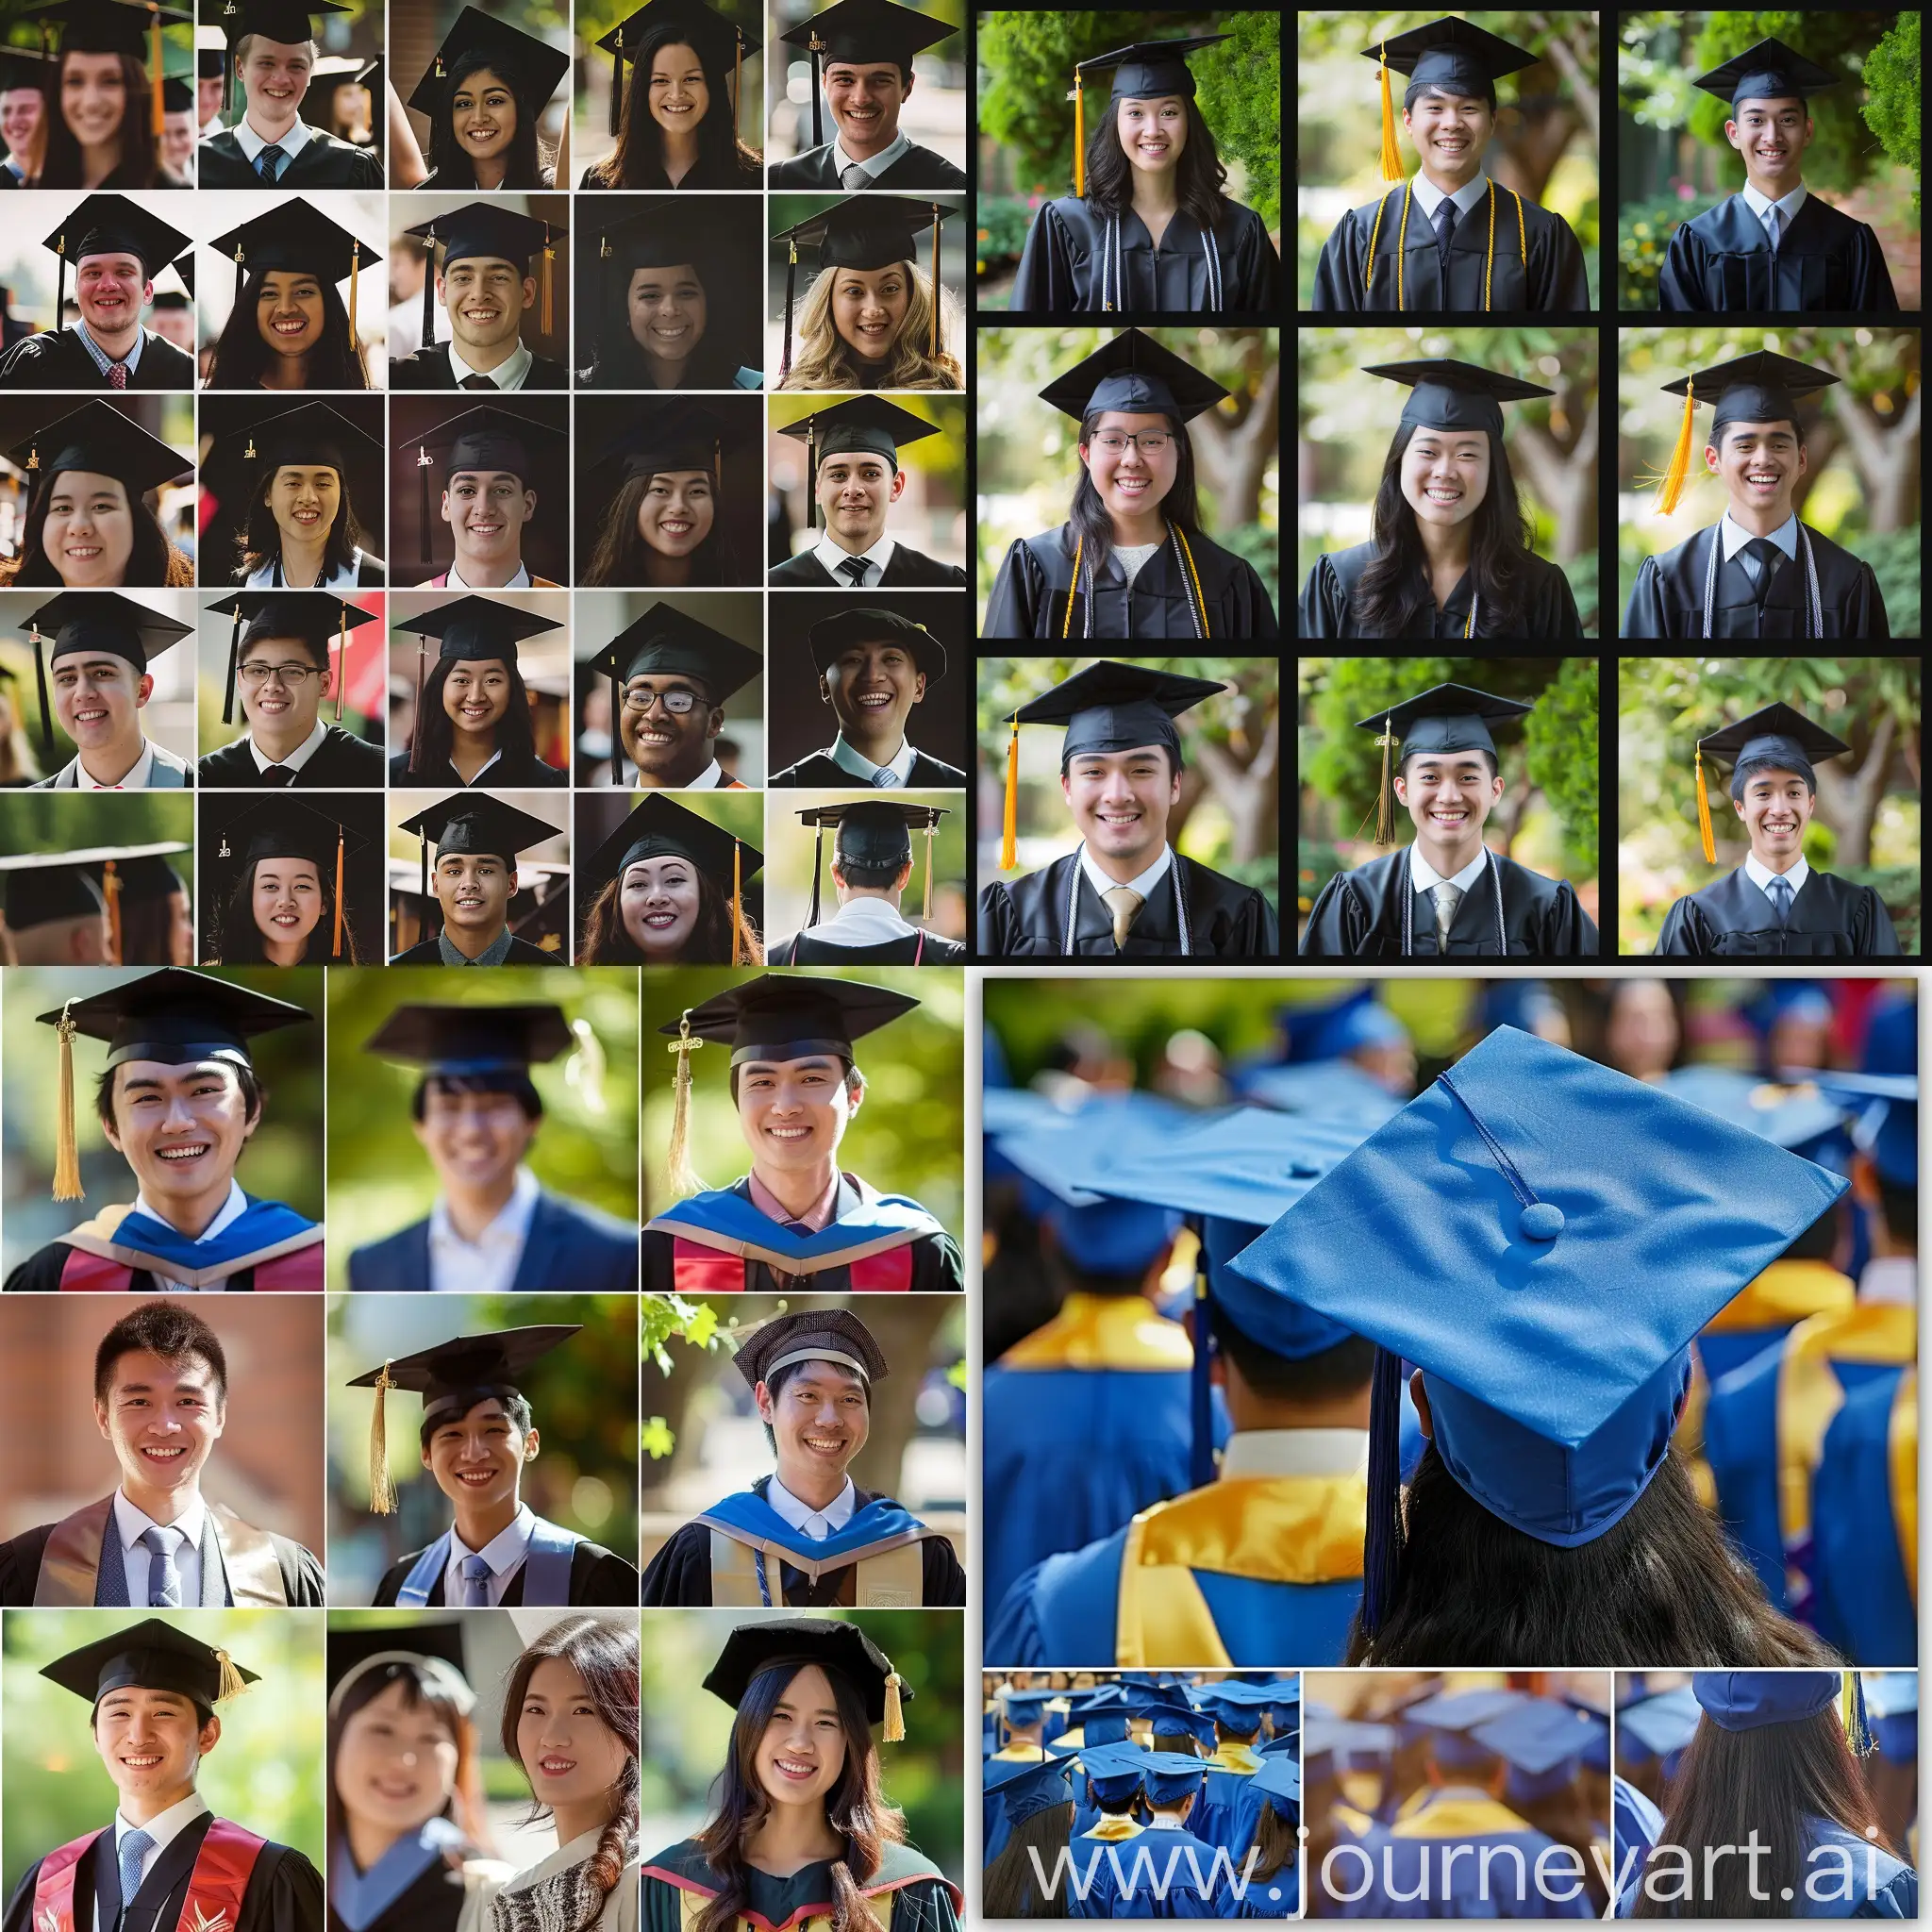 Diverse-Graduates-Celebrating-Achievement-in-Vibrant-Photo-Collage